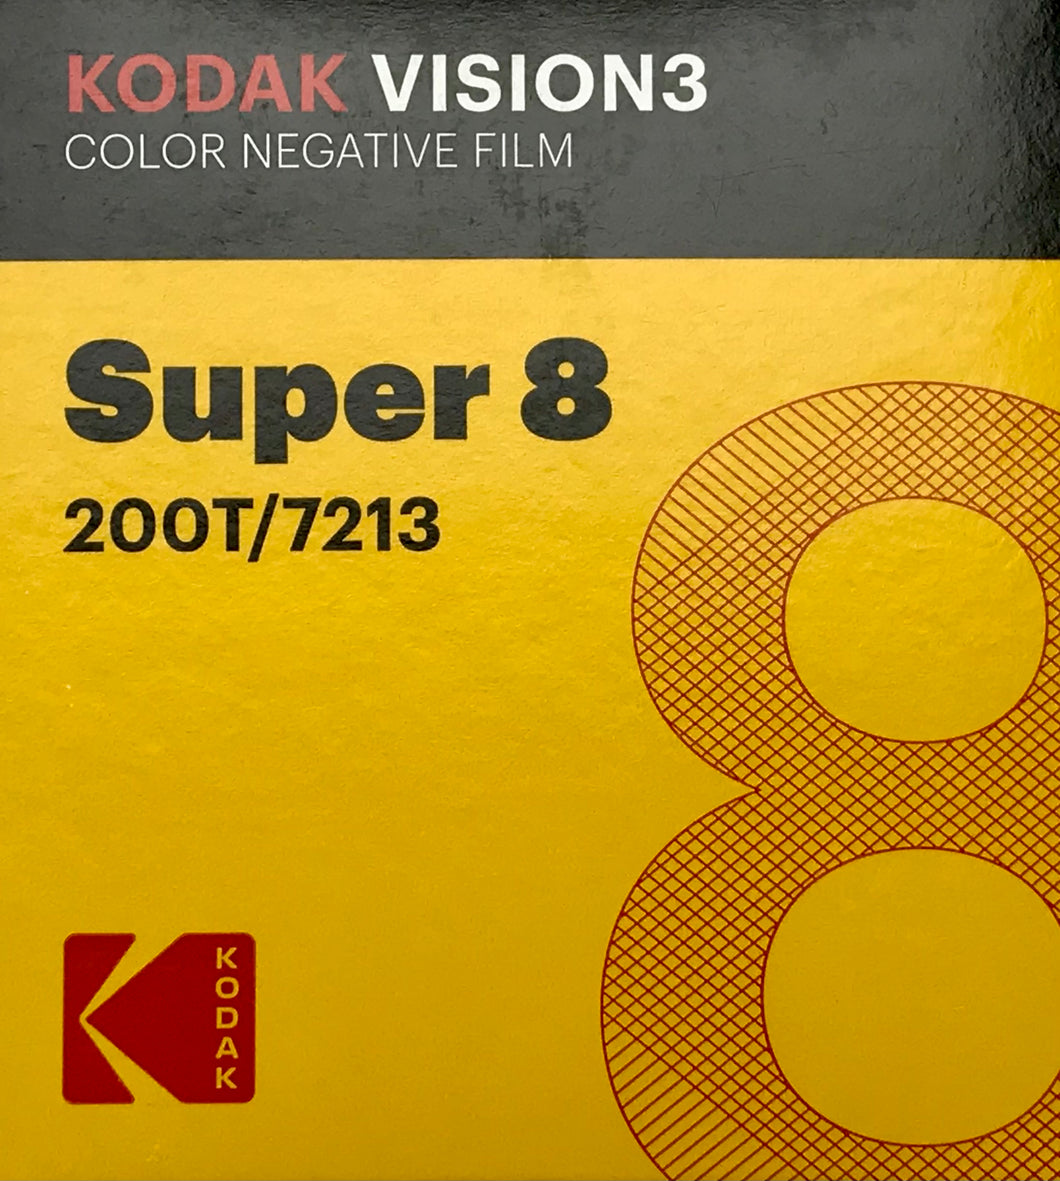 Kodak Vision 3 200T/7213 for Super 8